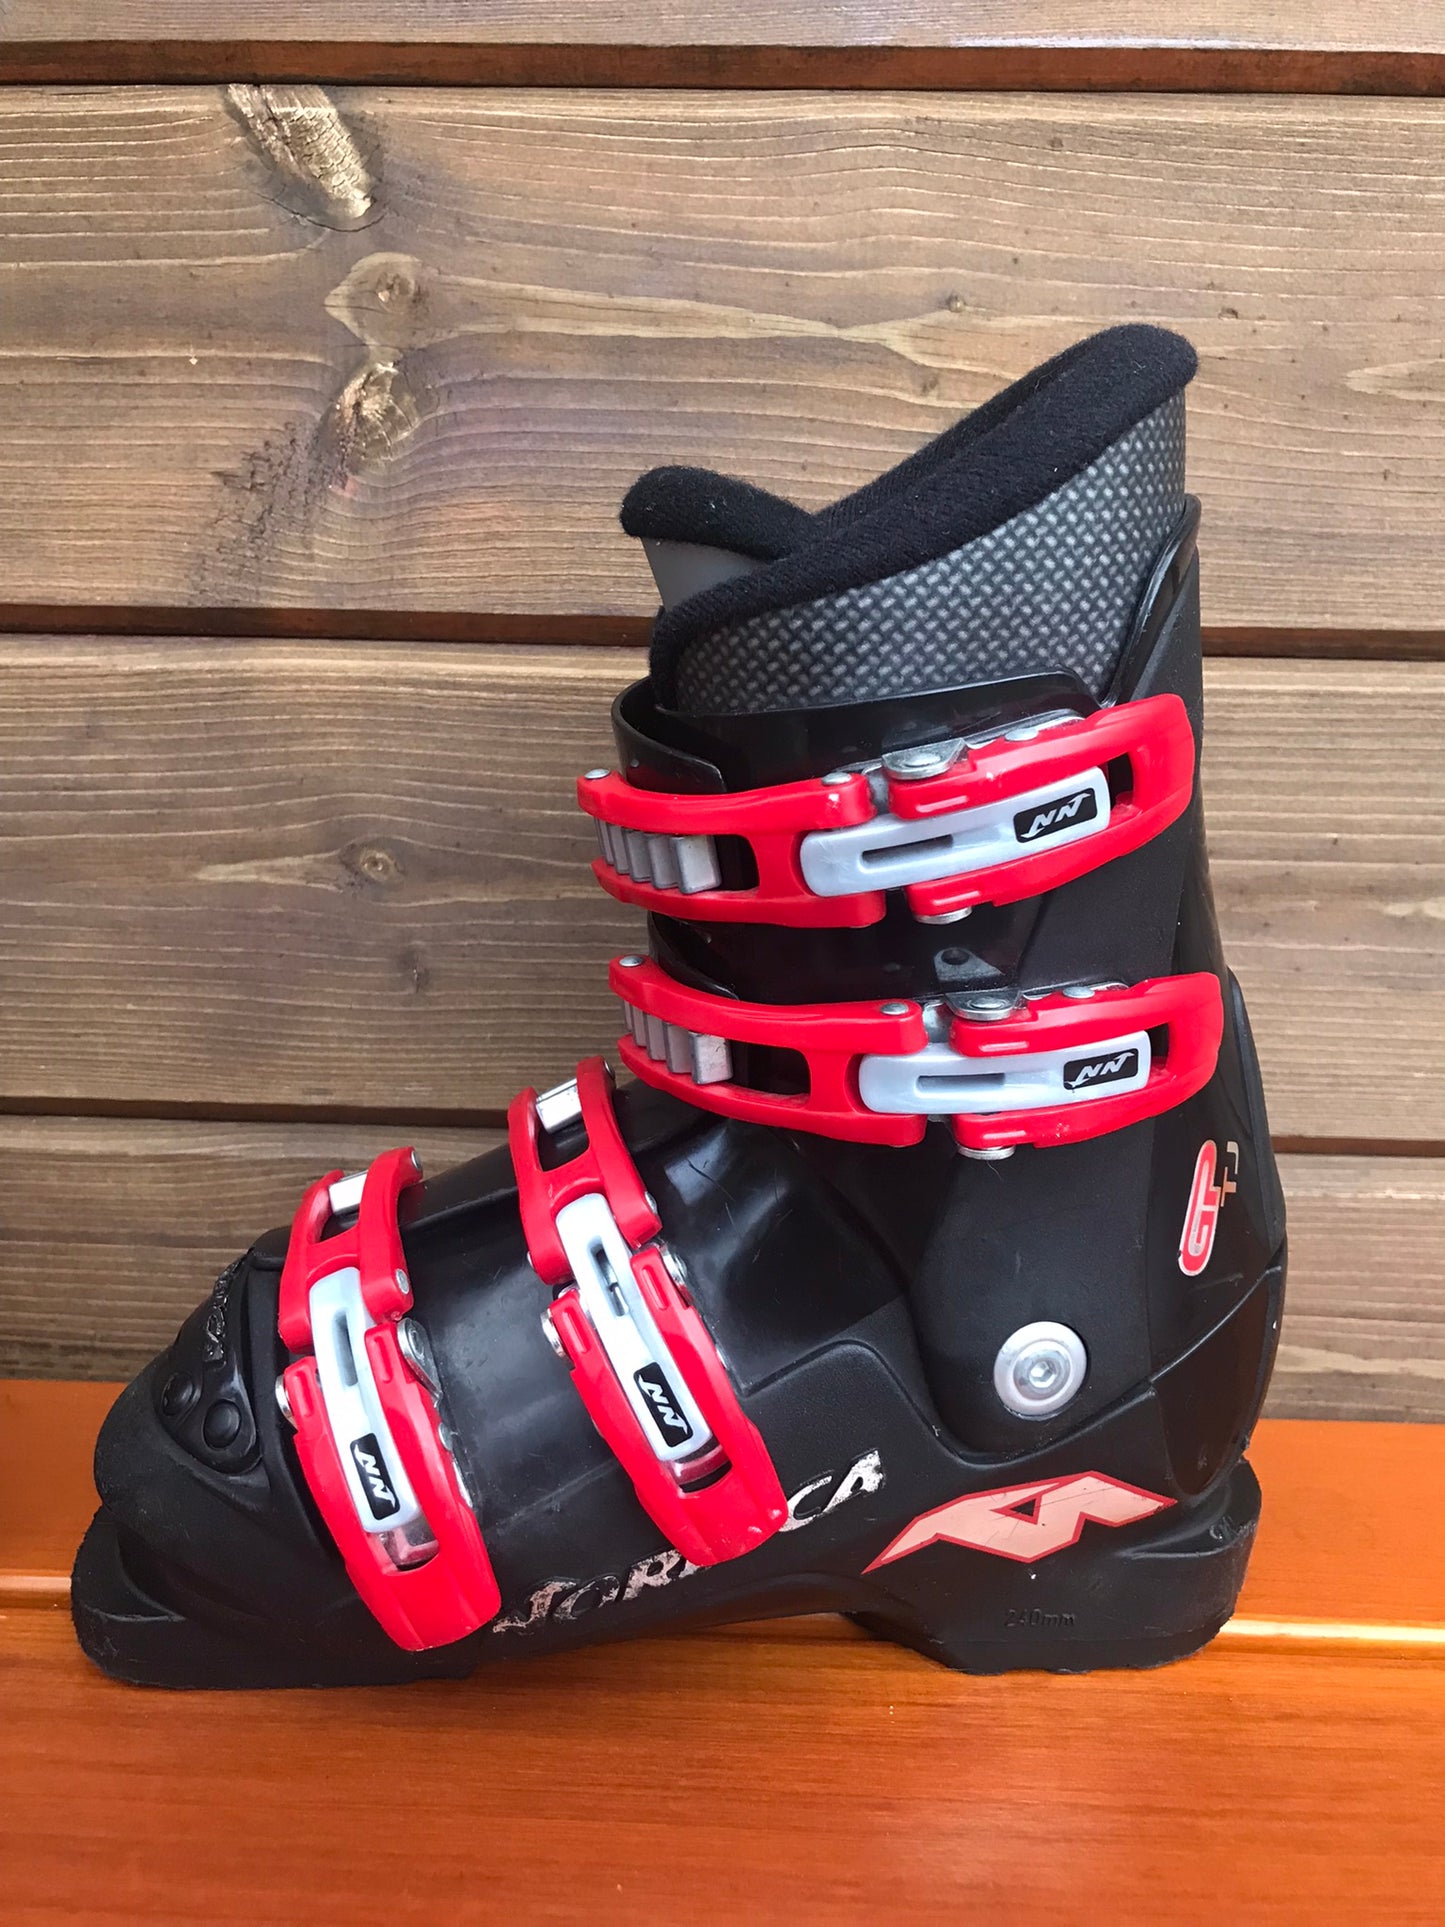 Ski Boots Mondo Size 19.0 -20.0 Child Size 1-2 240 mm Nordica Black Red Minor Wear Scratches